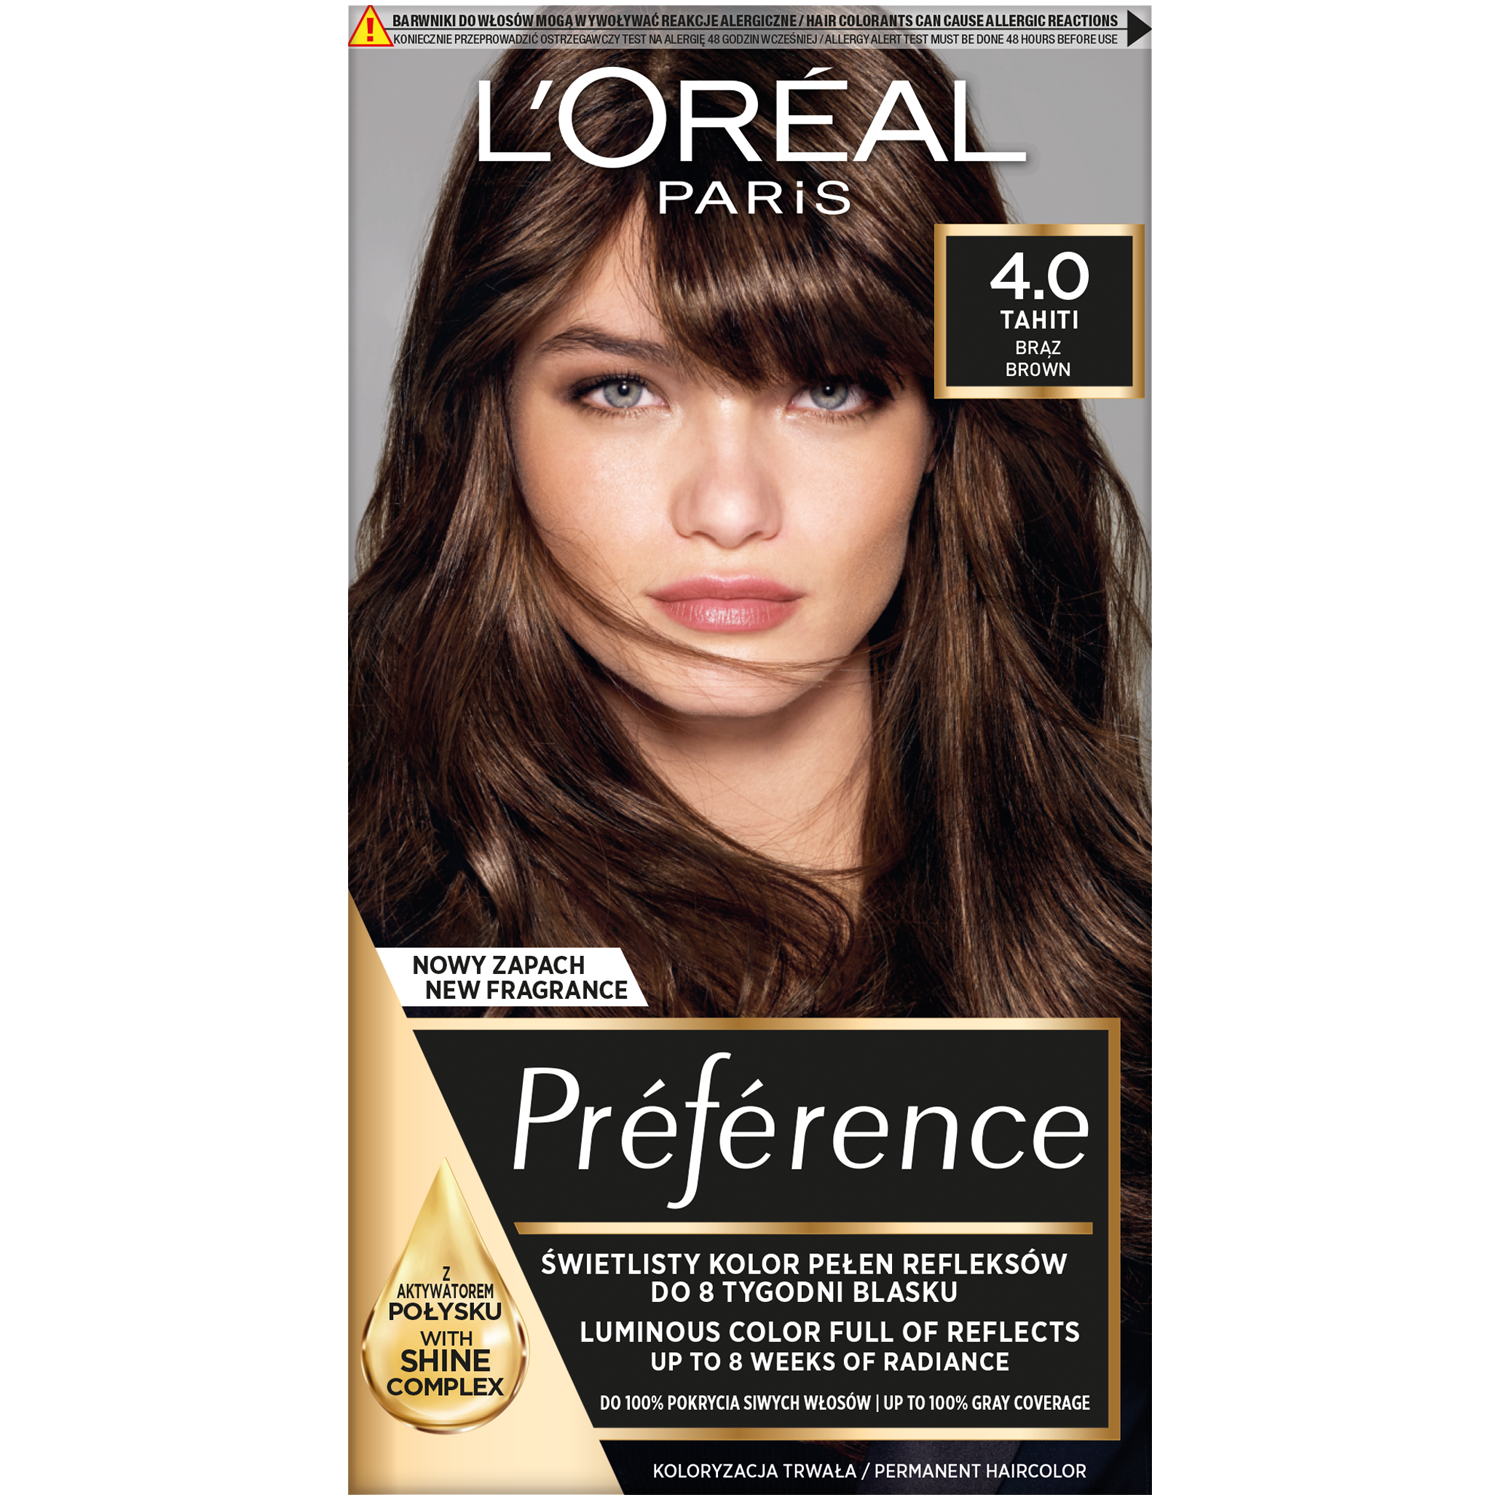 L'Oréal Paris Preference краска для волос 4.0 таити, 1 упаковка